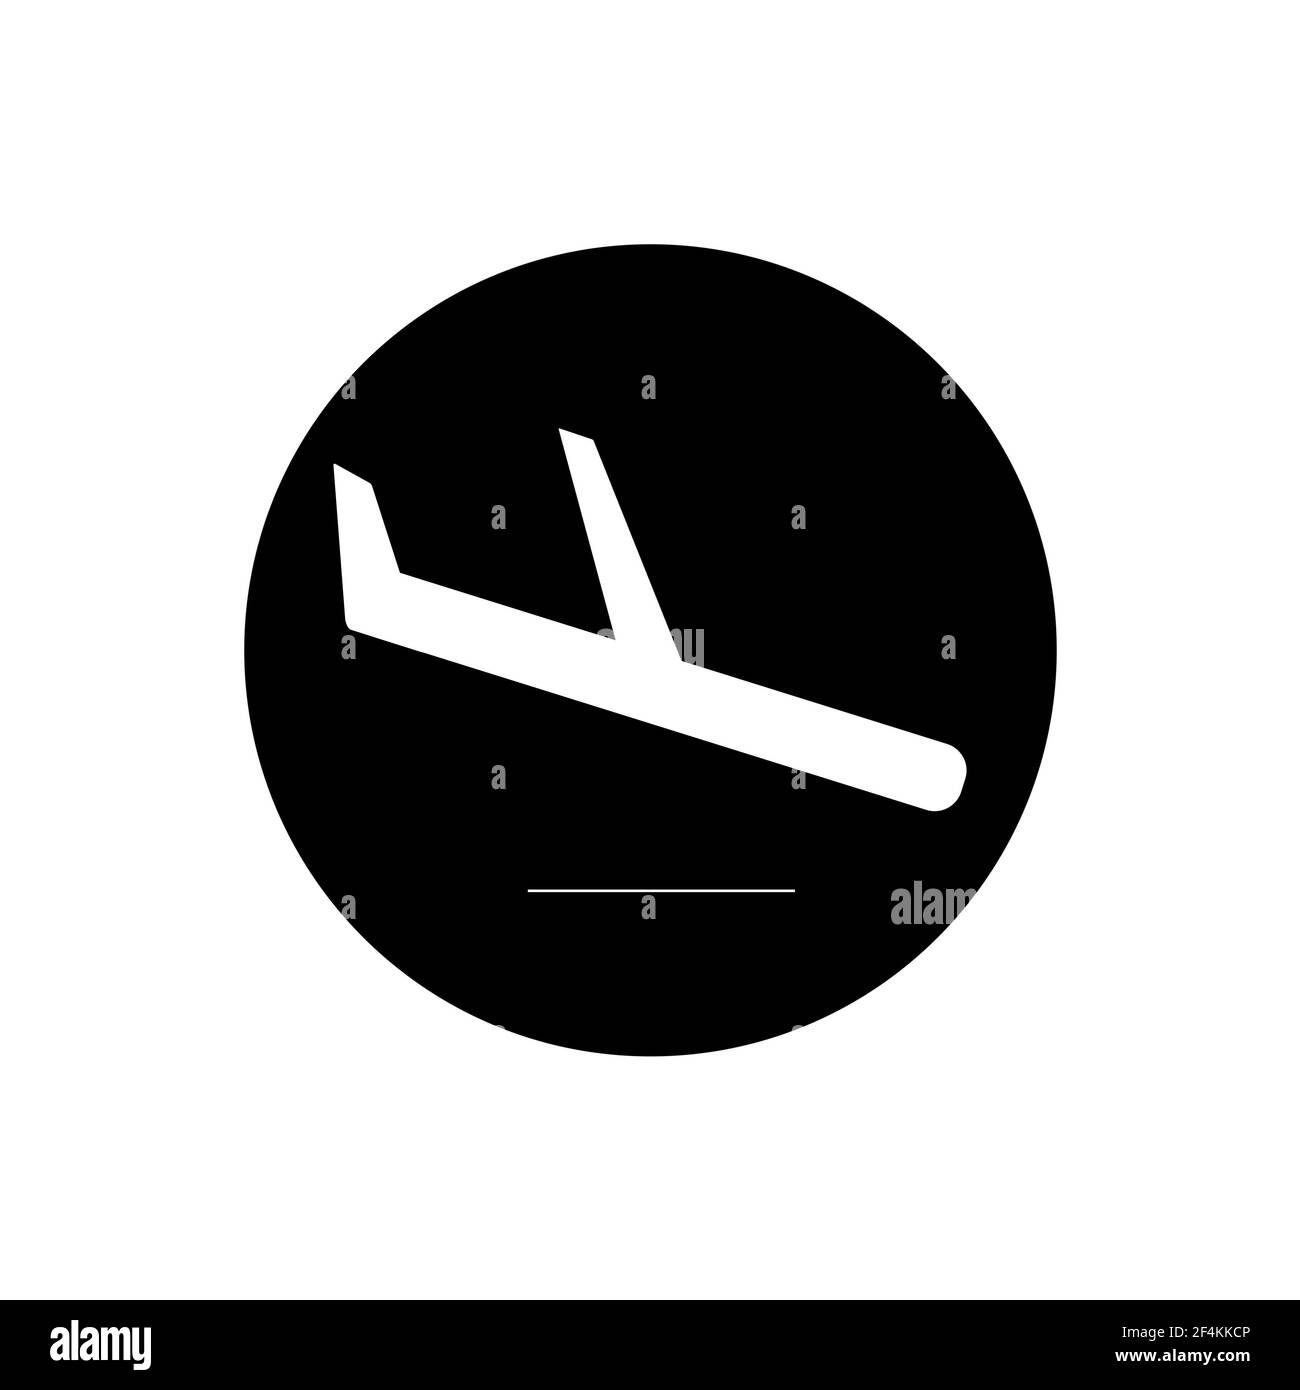 Plane arrival logo with landing airplane icon. Stock Photo